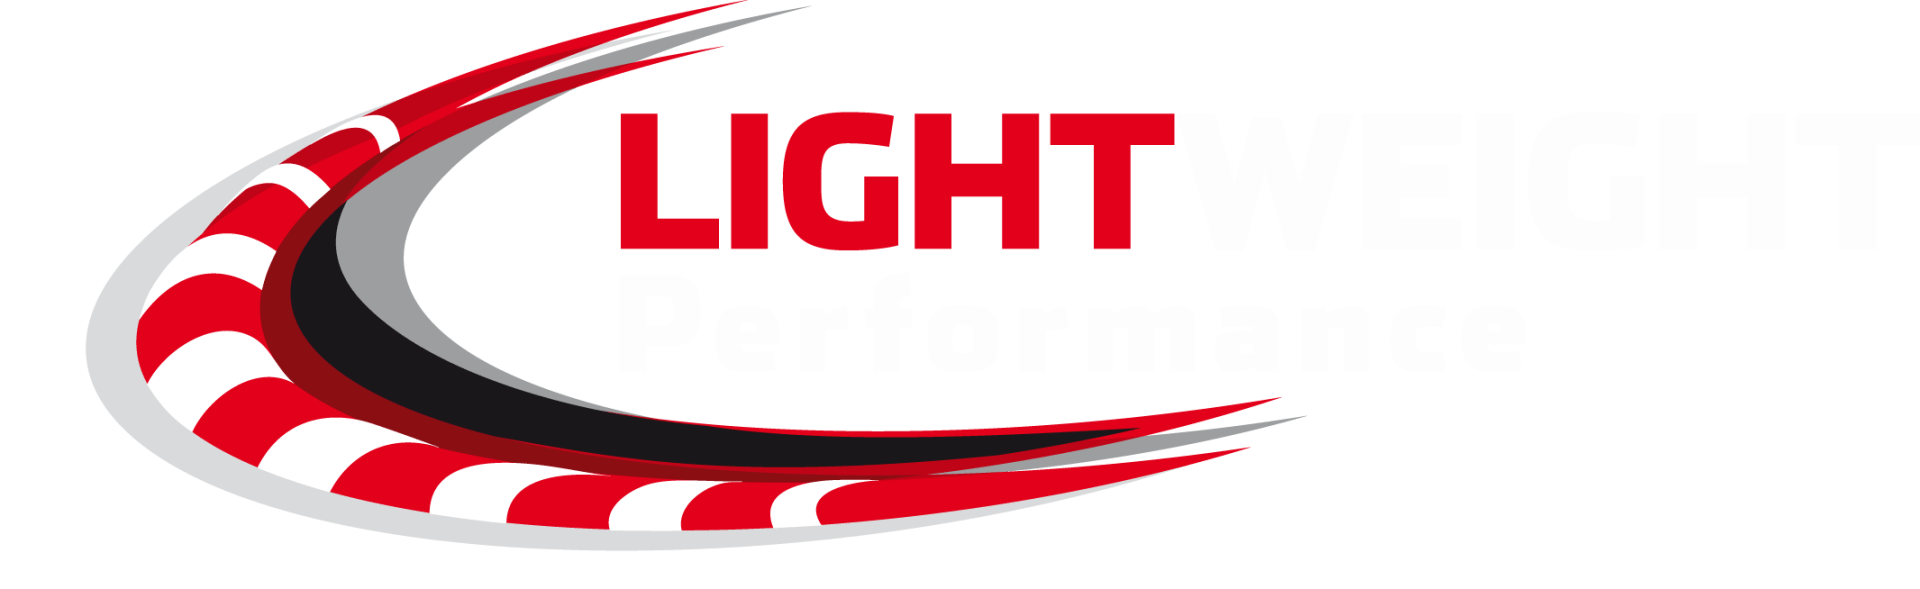 Lightweight Performance Logo